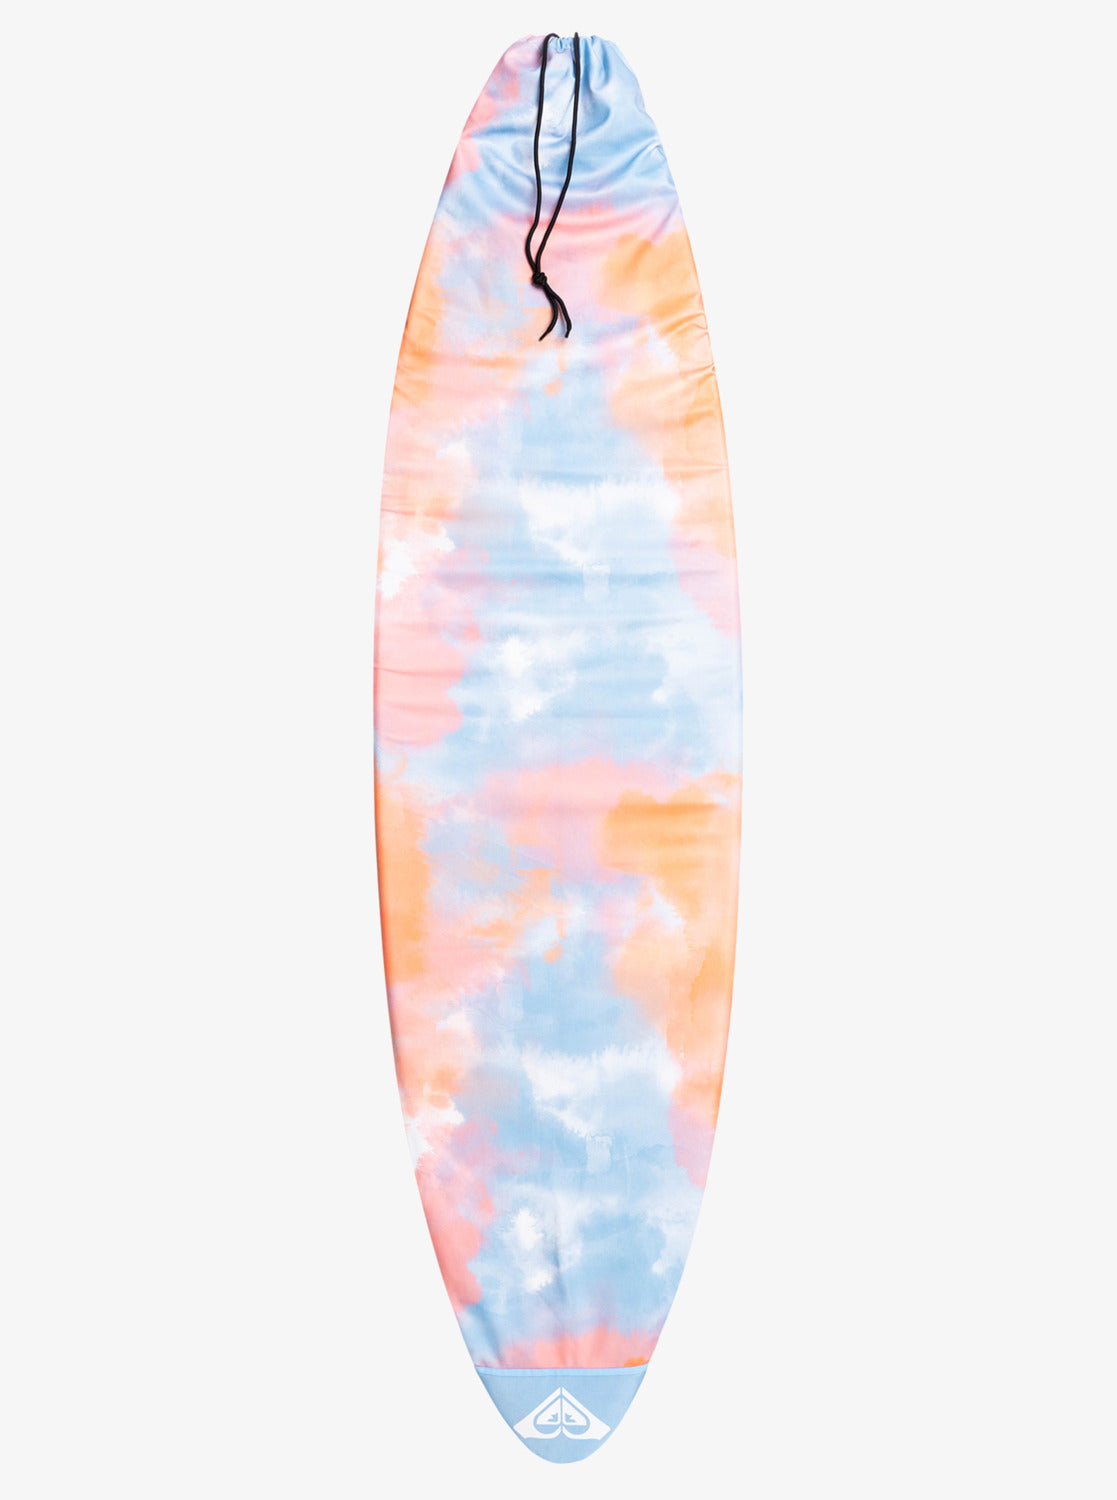 SACCA CALZINO SURF ROXY 6.3 ft Shortboard multicolor